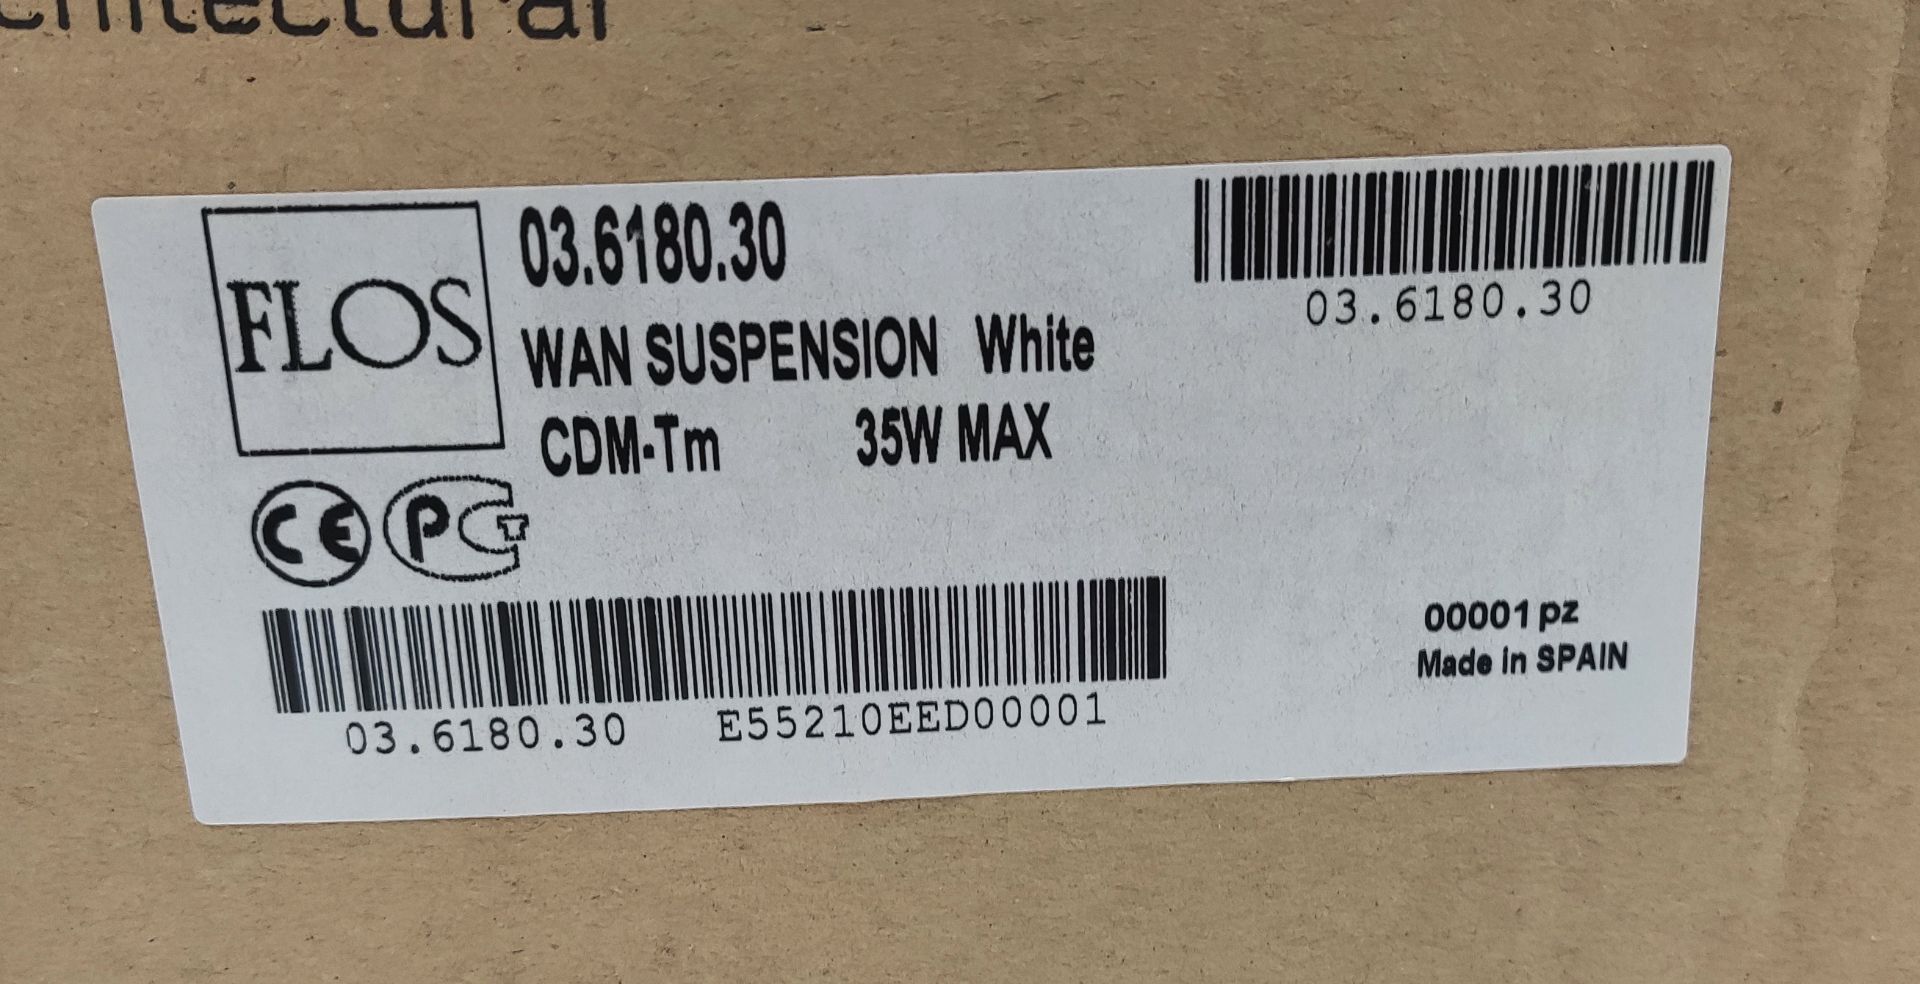 4 x FLOS Wan Suspension White Cdm-Tm 35W Max 03.6180.30 - RRP £636 - Ref: ATR152/1-4/ATRPB - - Image 6 of 23